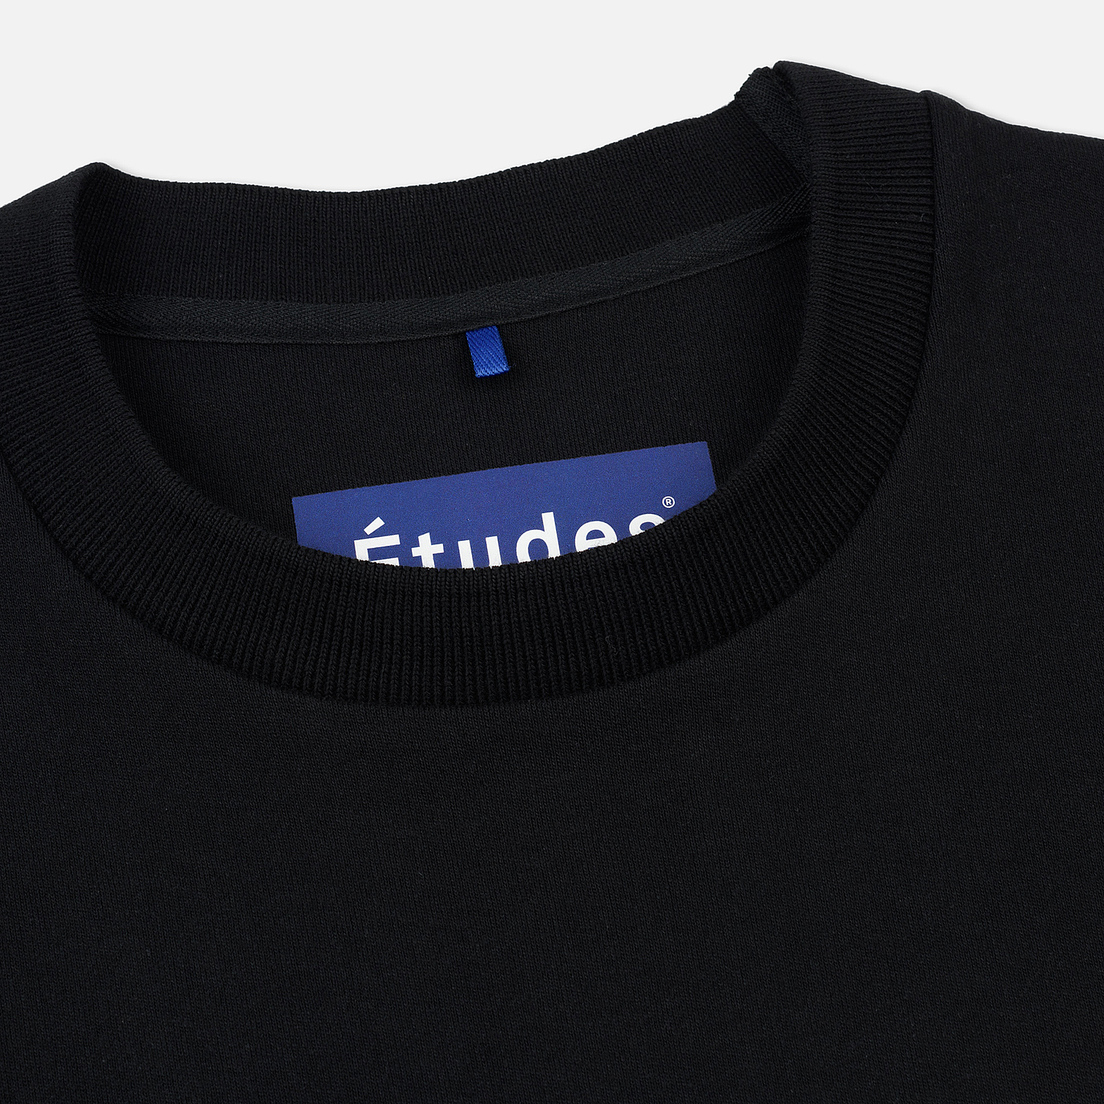 Etudes Мужская футболка Contributor Etudes